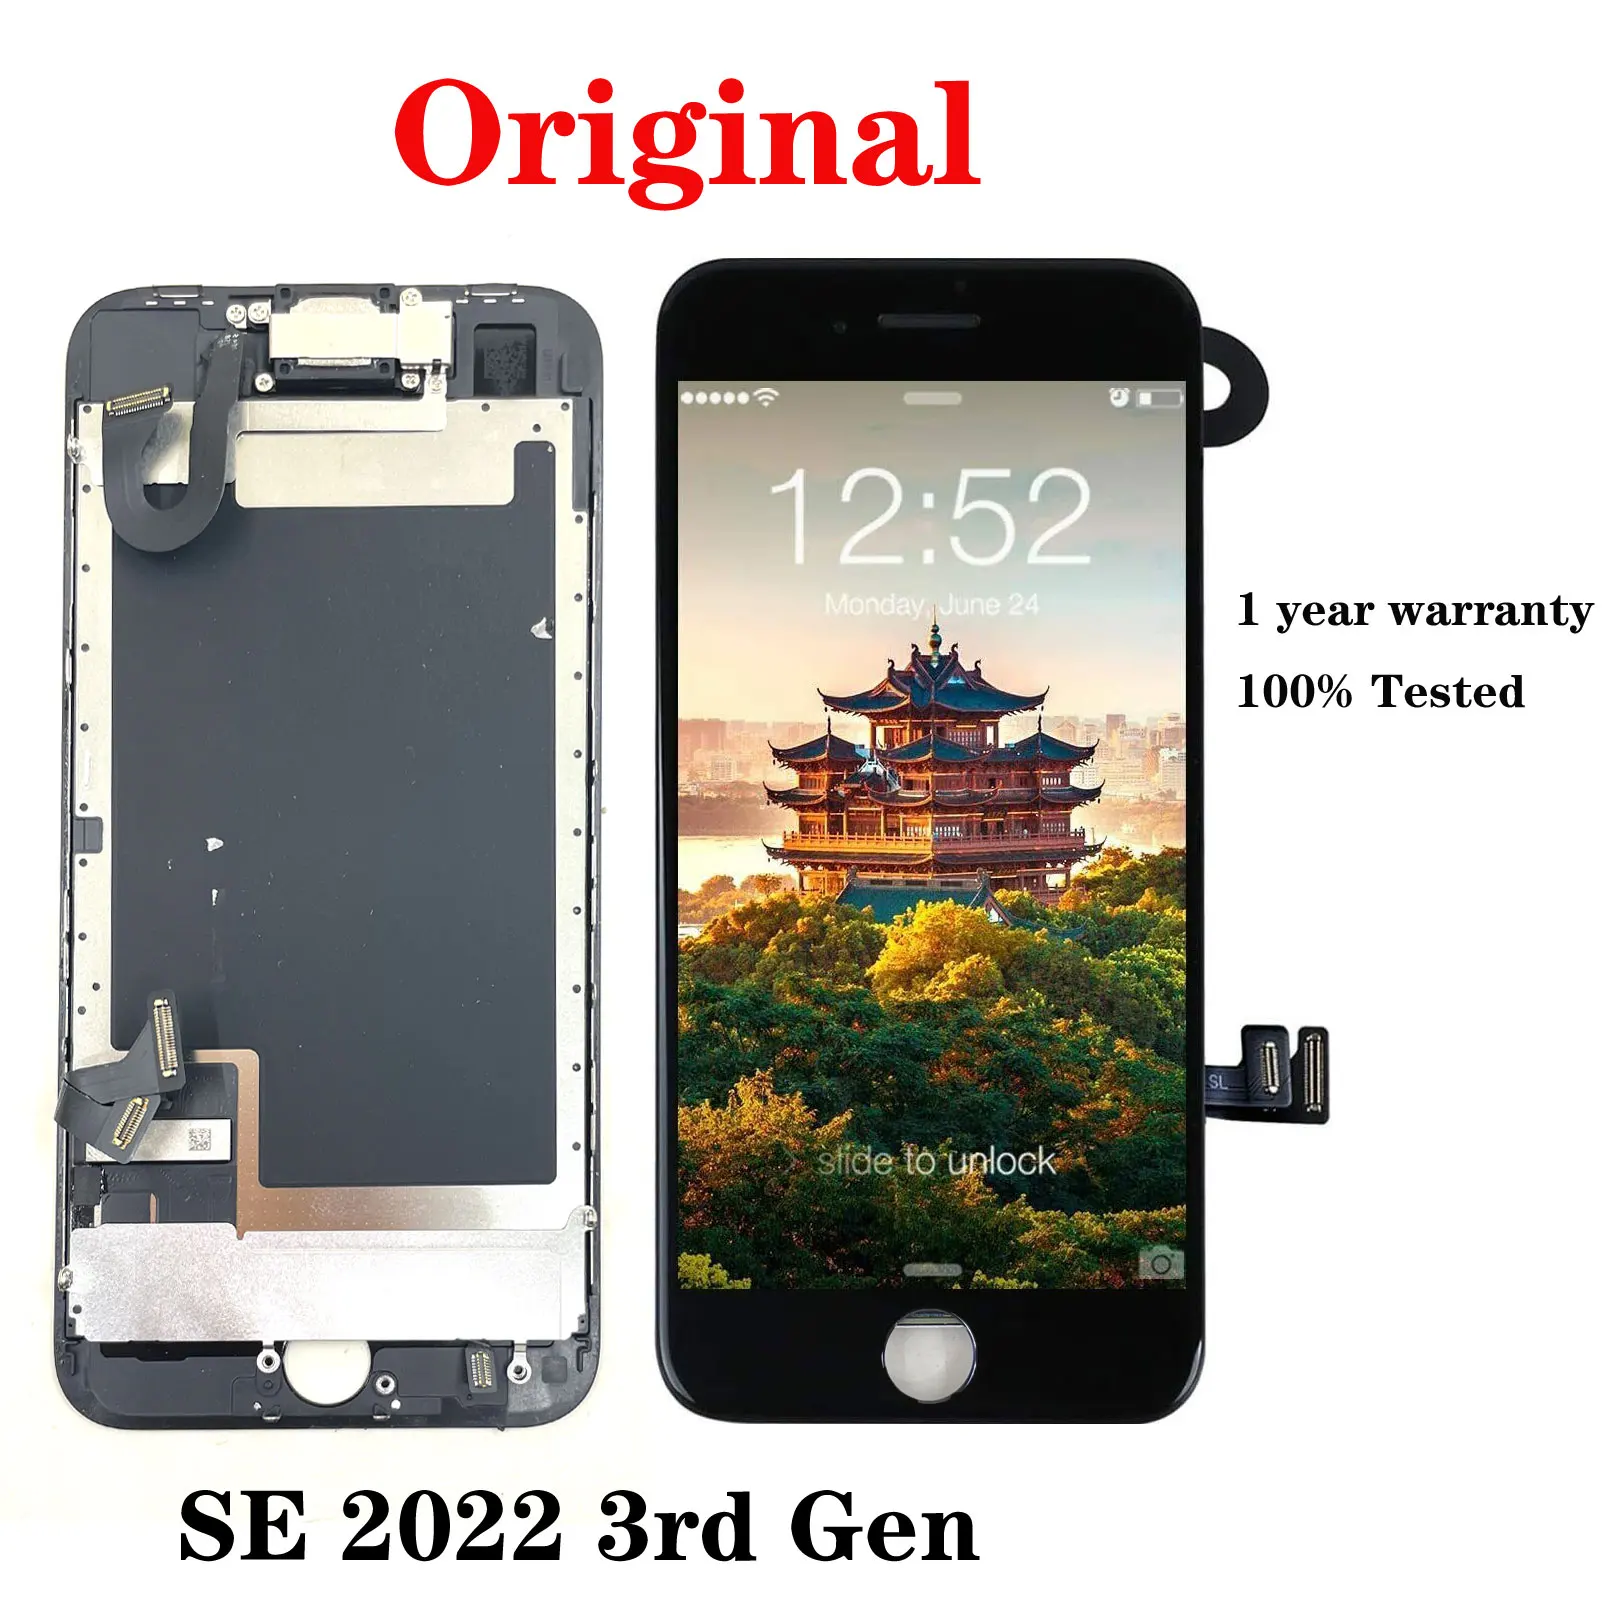 Original Display Refurbish For iPhone SE 2022 3rd Gen Full Lcd Screen + front camera Replacement Parts